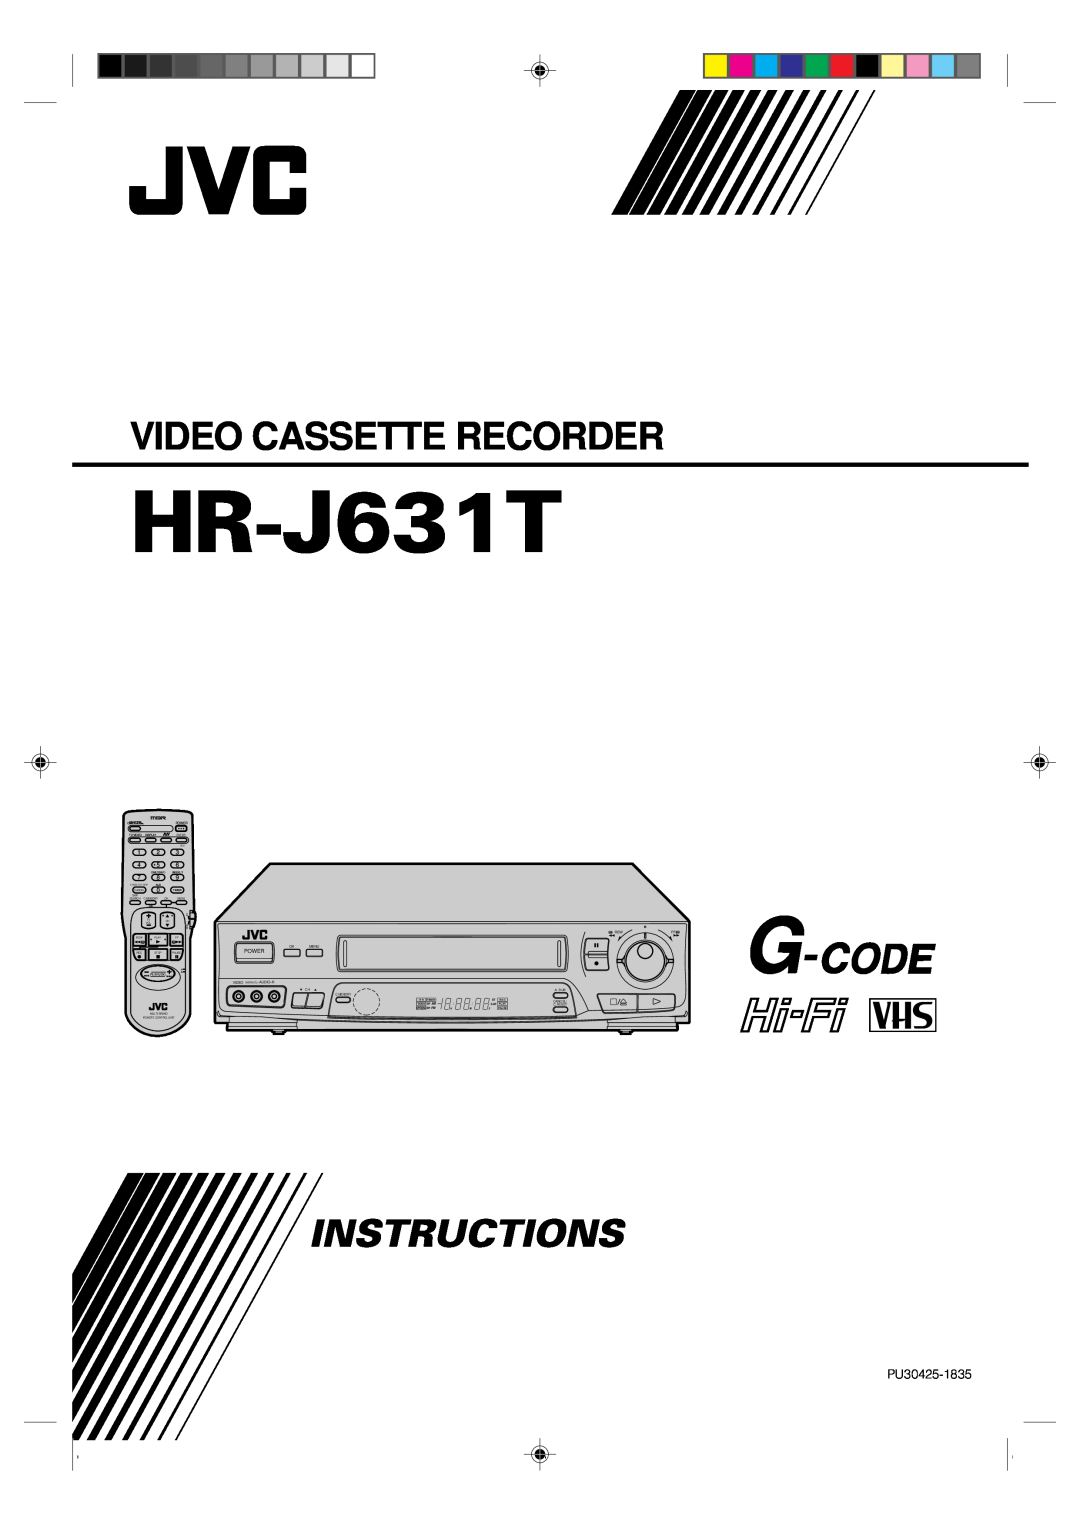 JVC HR-J631T manual Video Cassette Recorder, Instructions, PU30425-1835, Menu, Power, Push Jog, I T R Timer, R E C, Play 